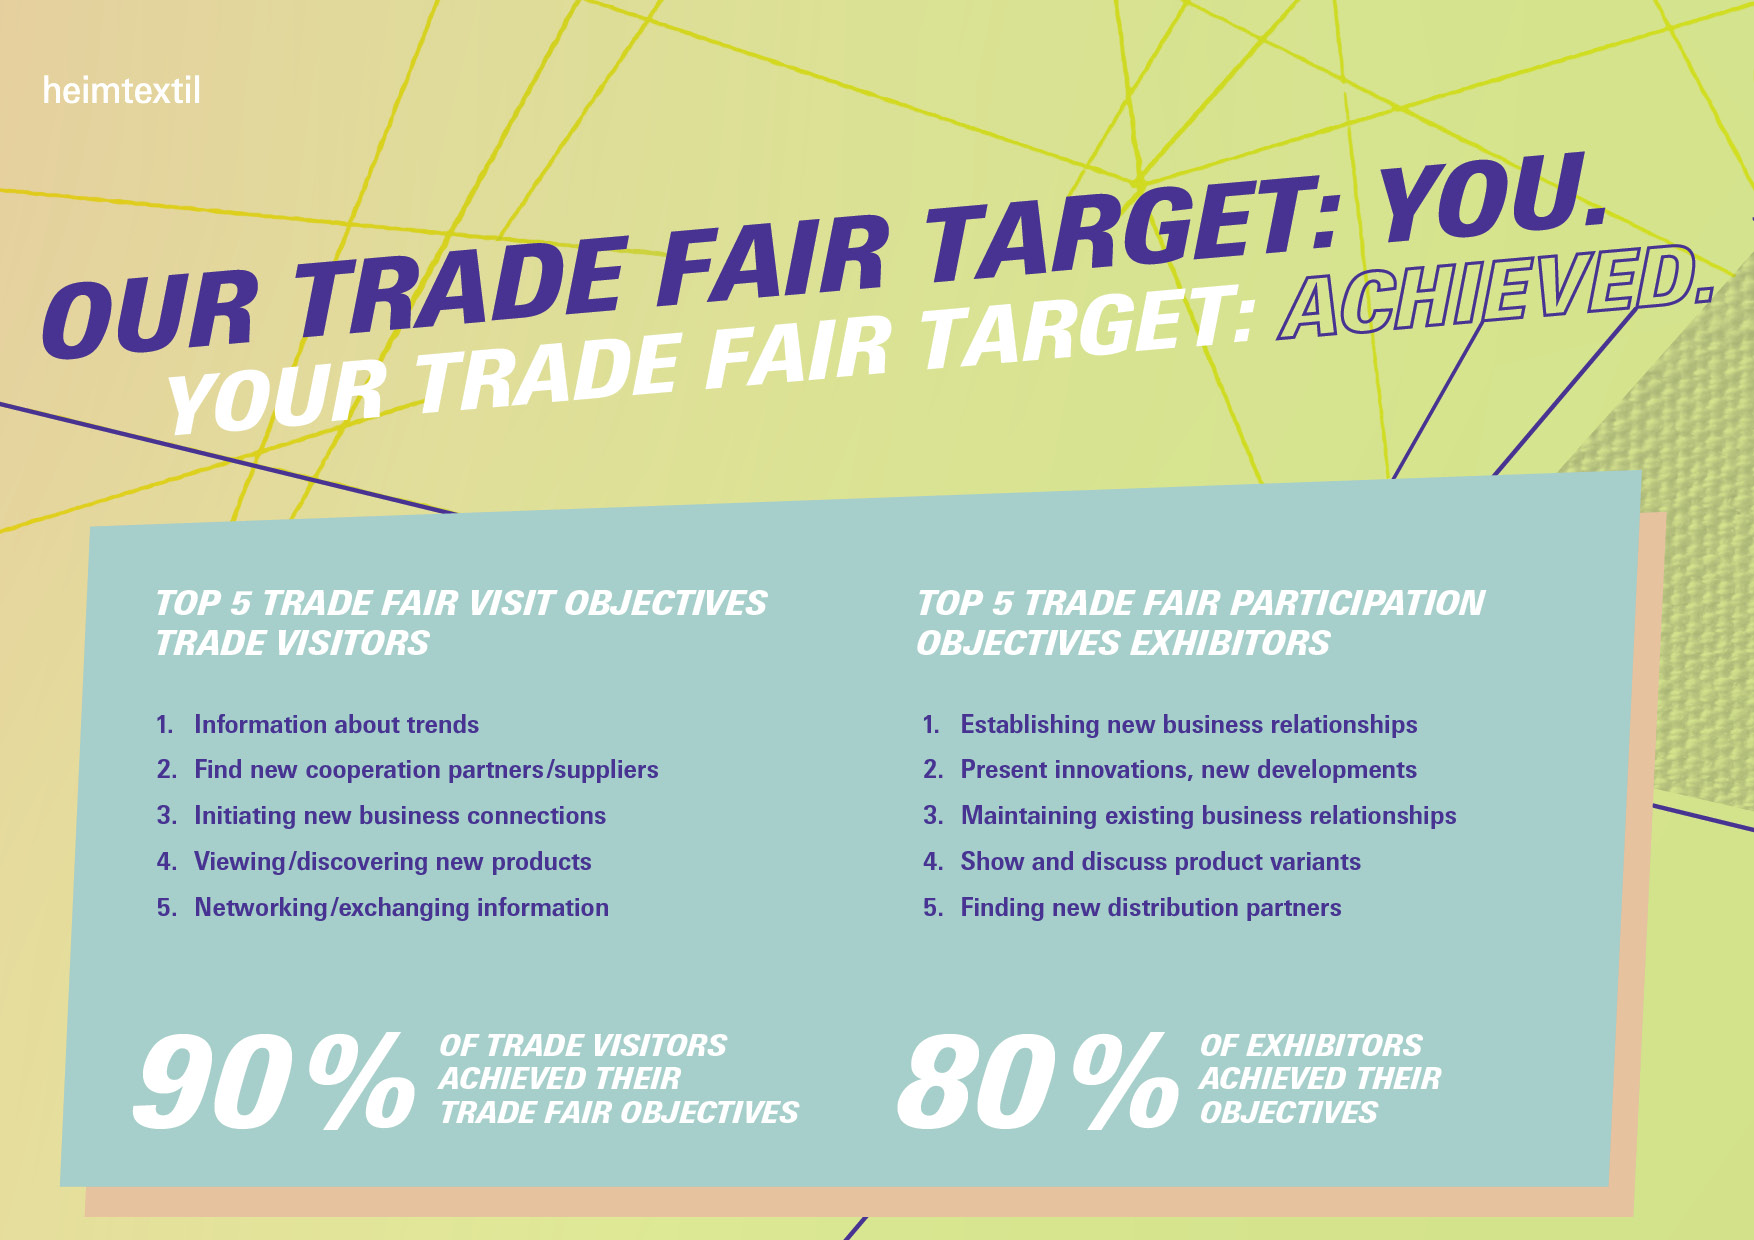 Our trade fair target: You